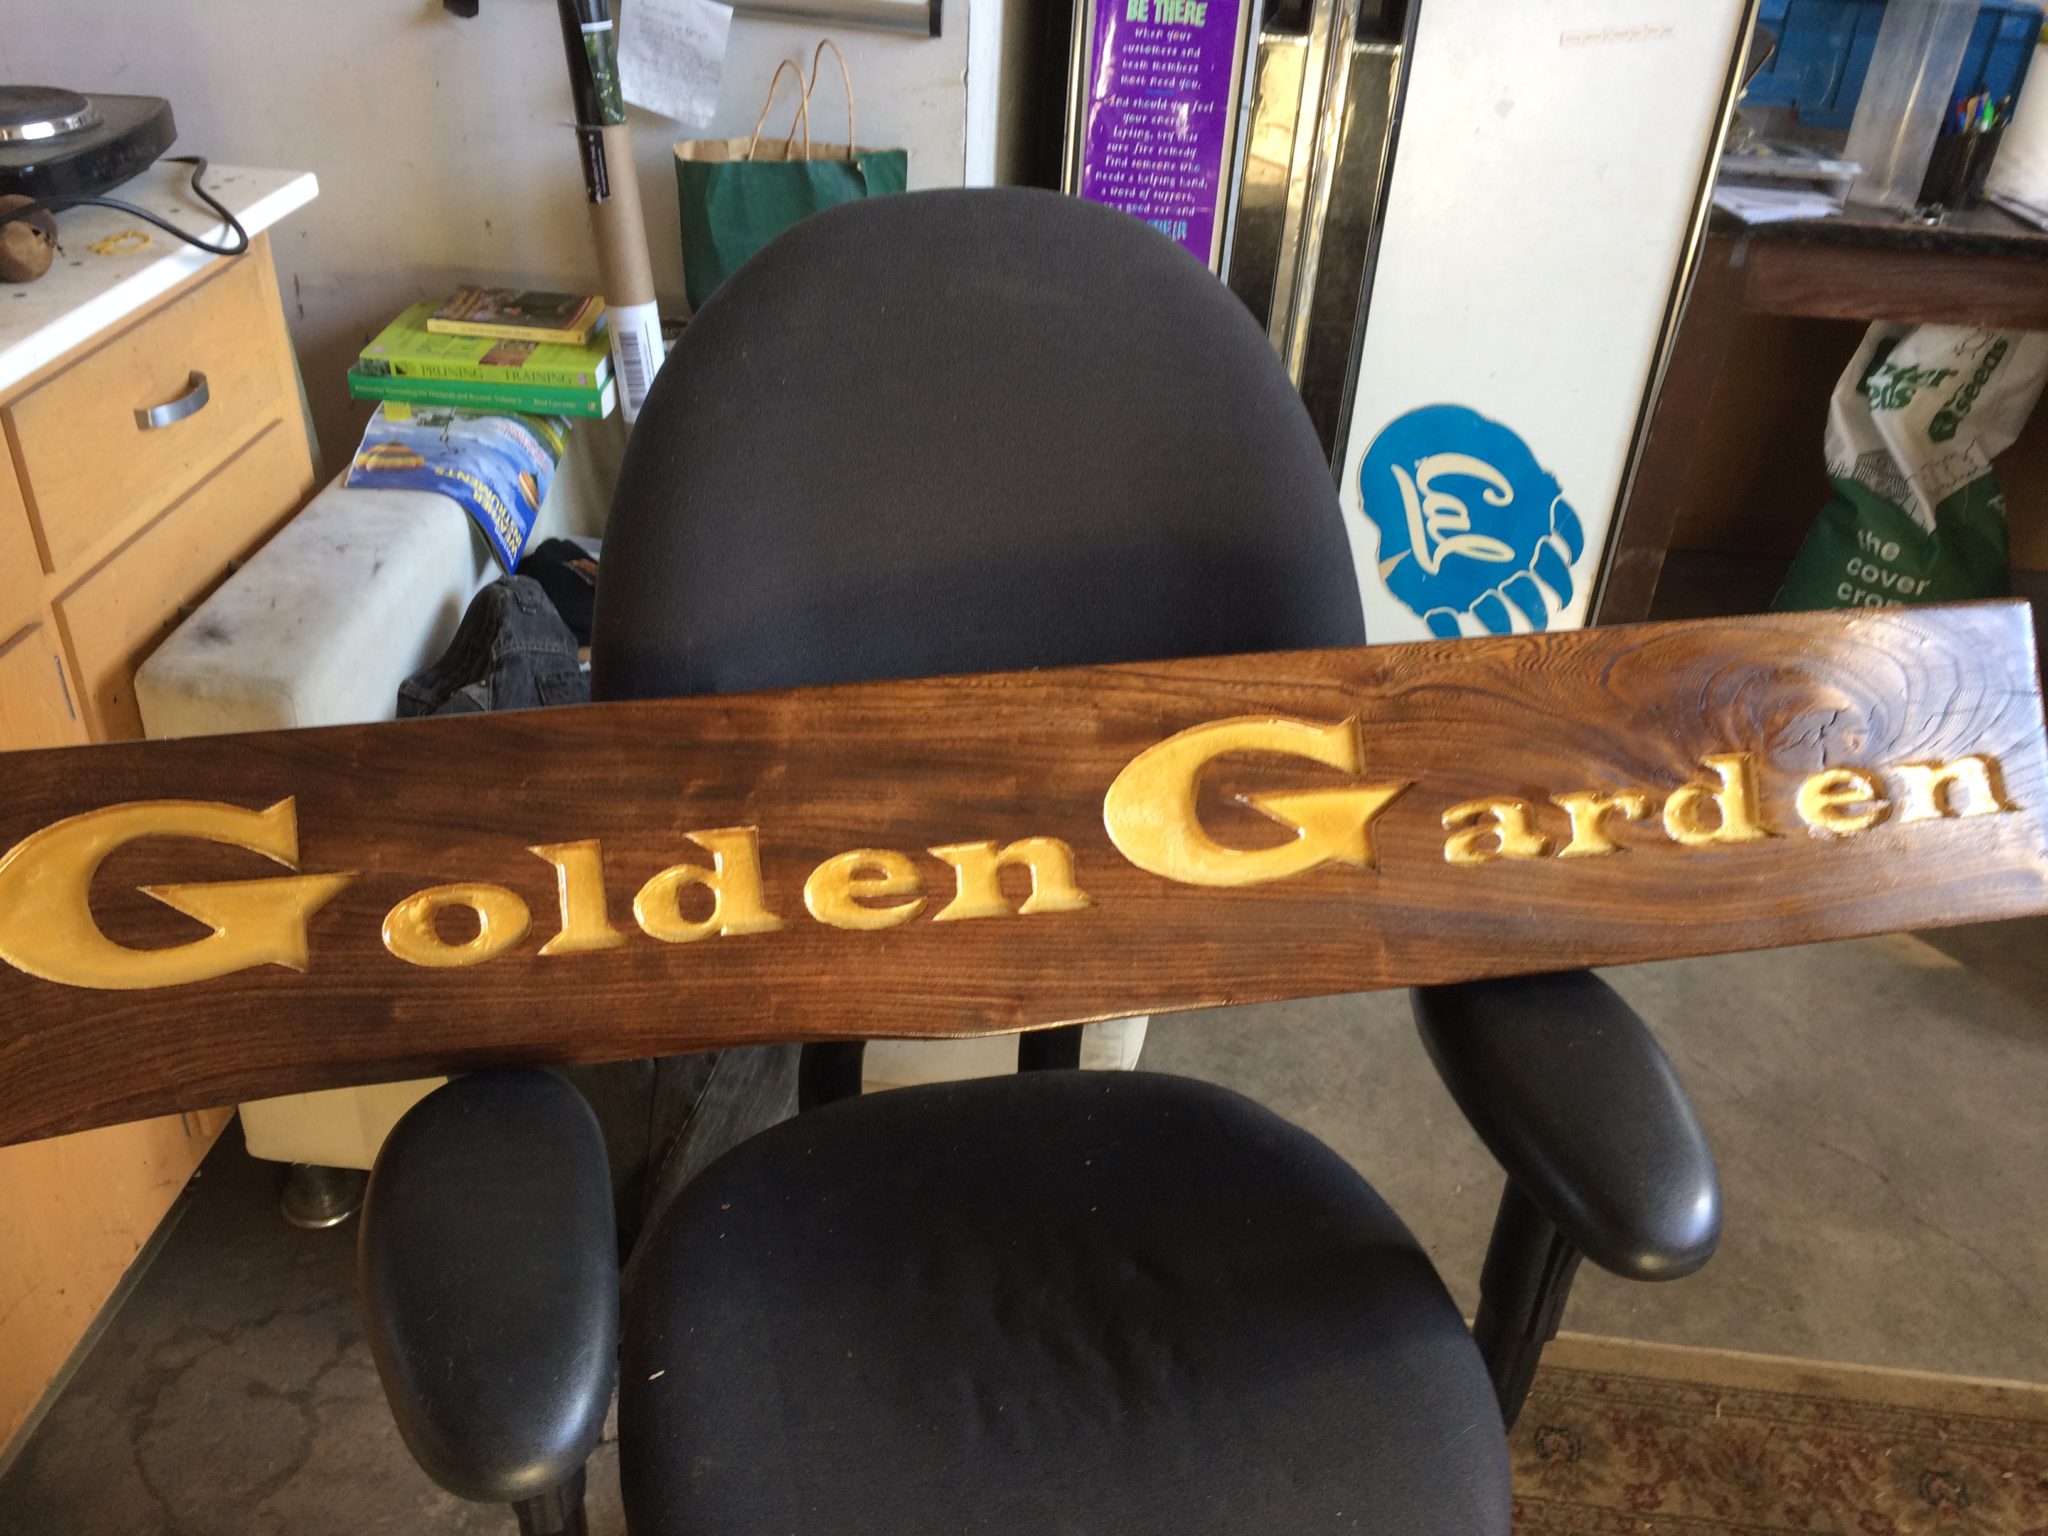 Photo of Golden Garden Sign